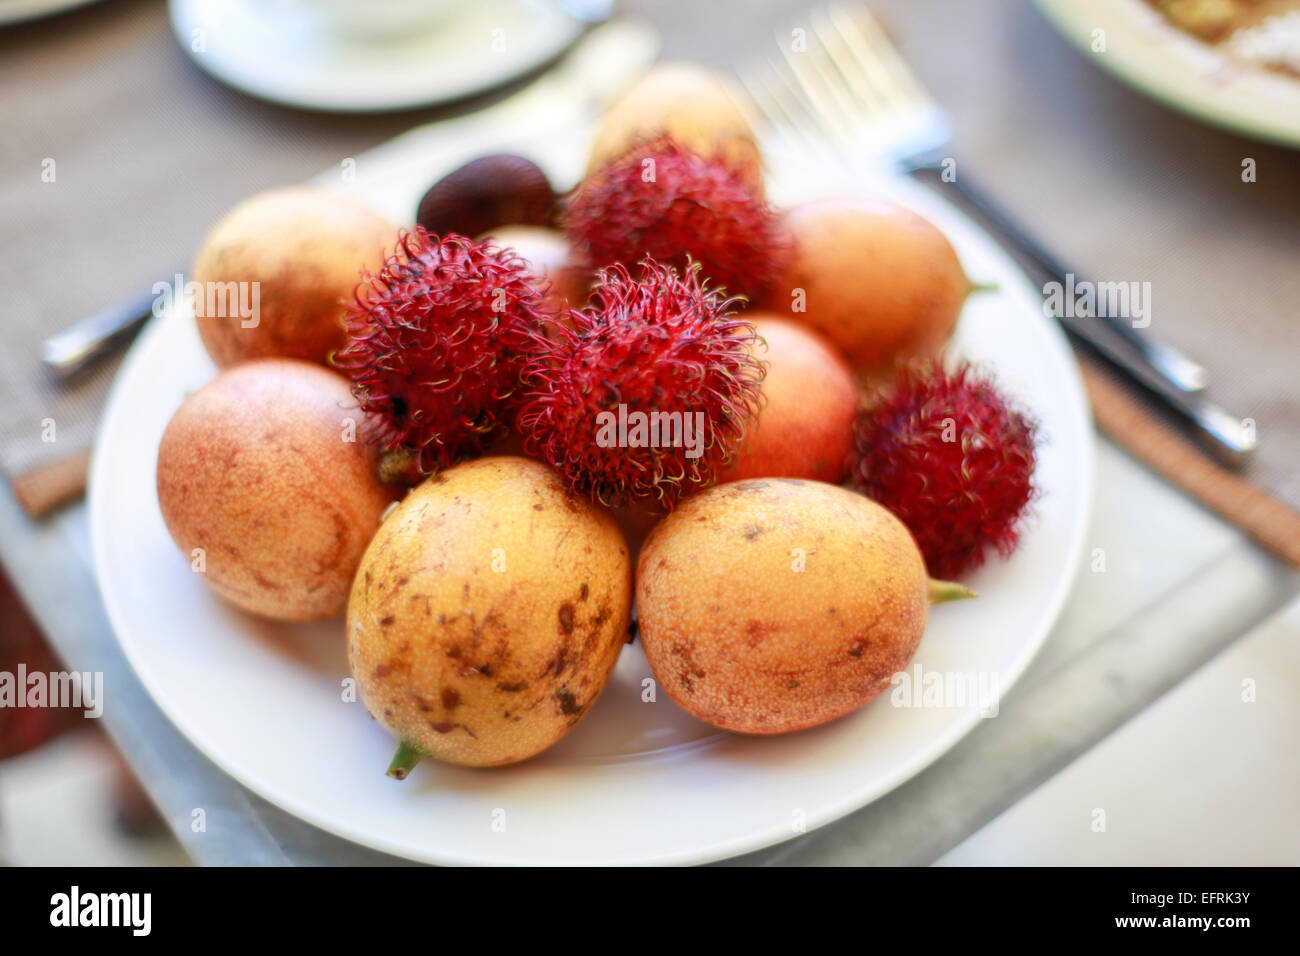 Rambutan and Passion fruits Stock Photo